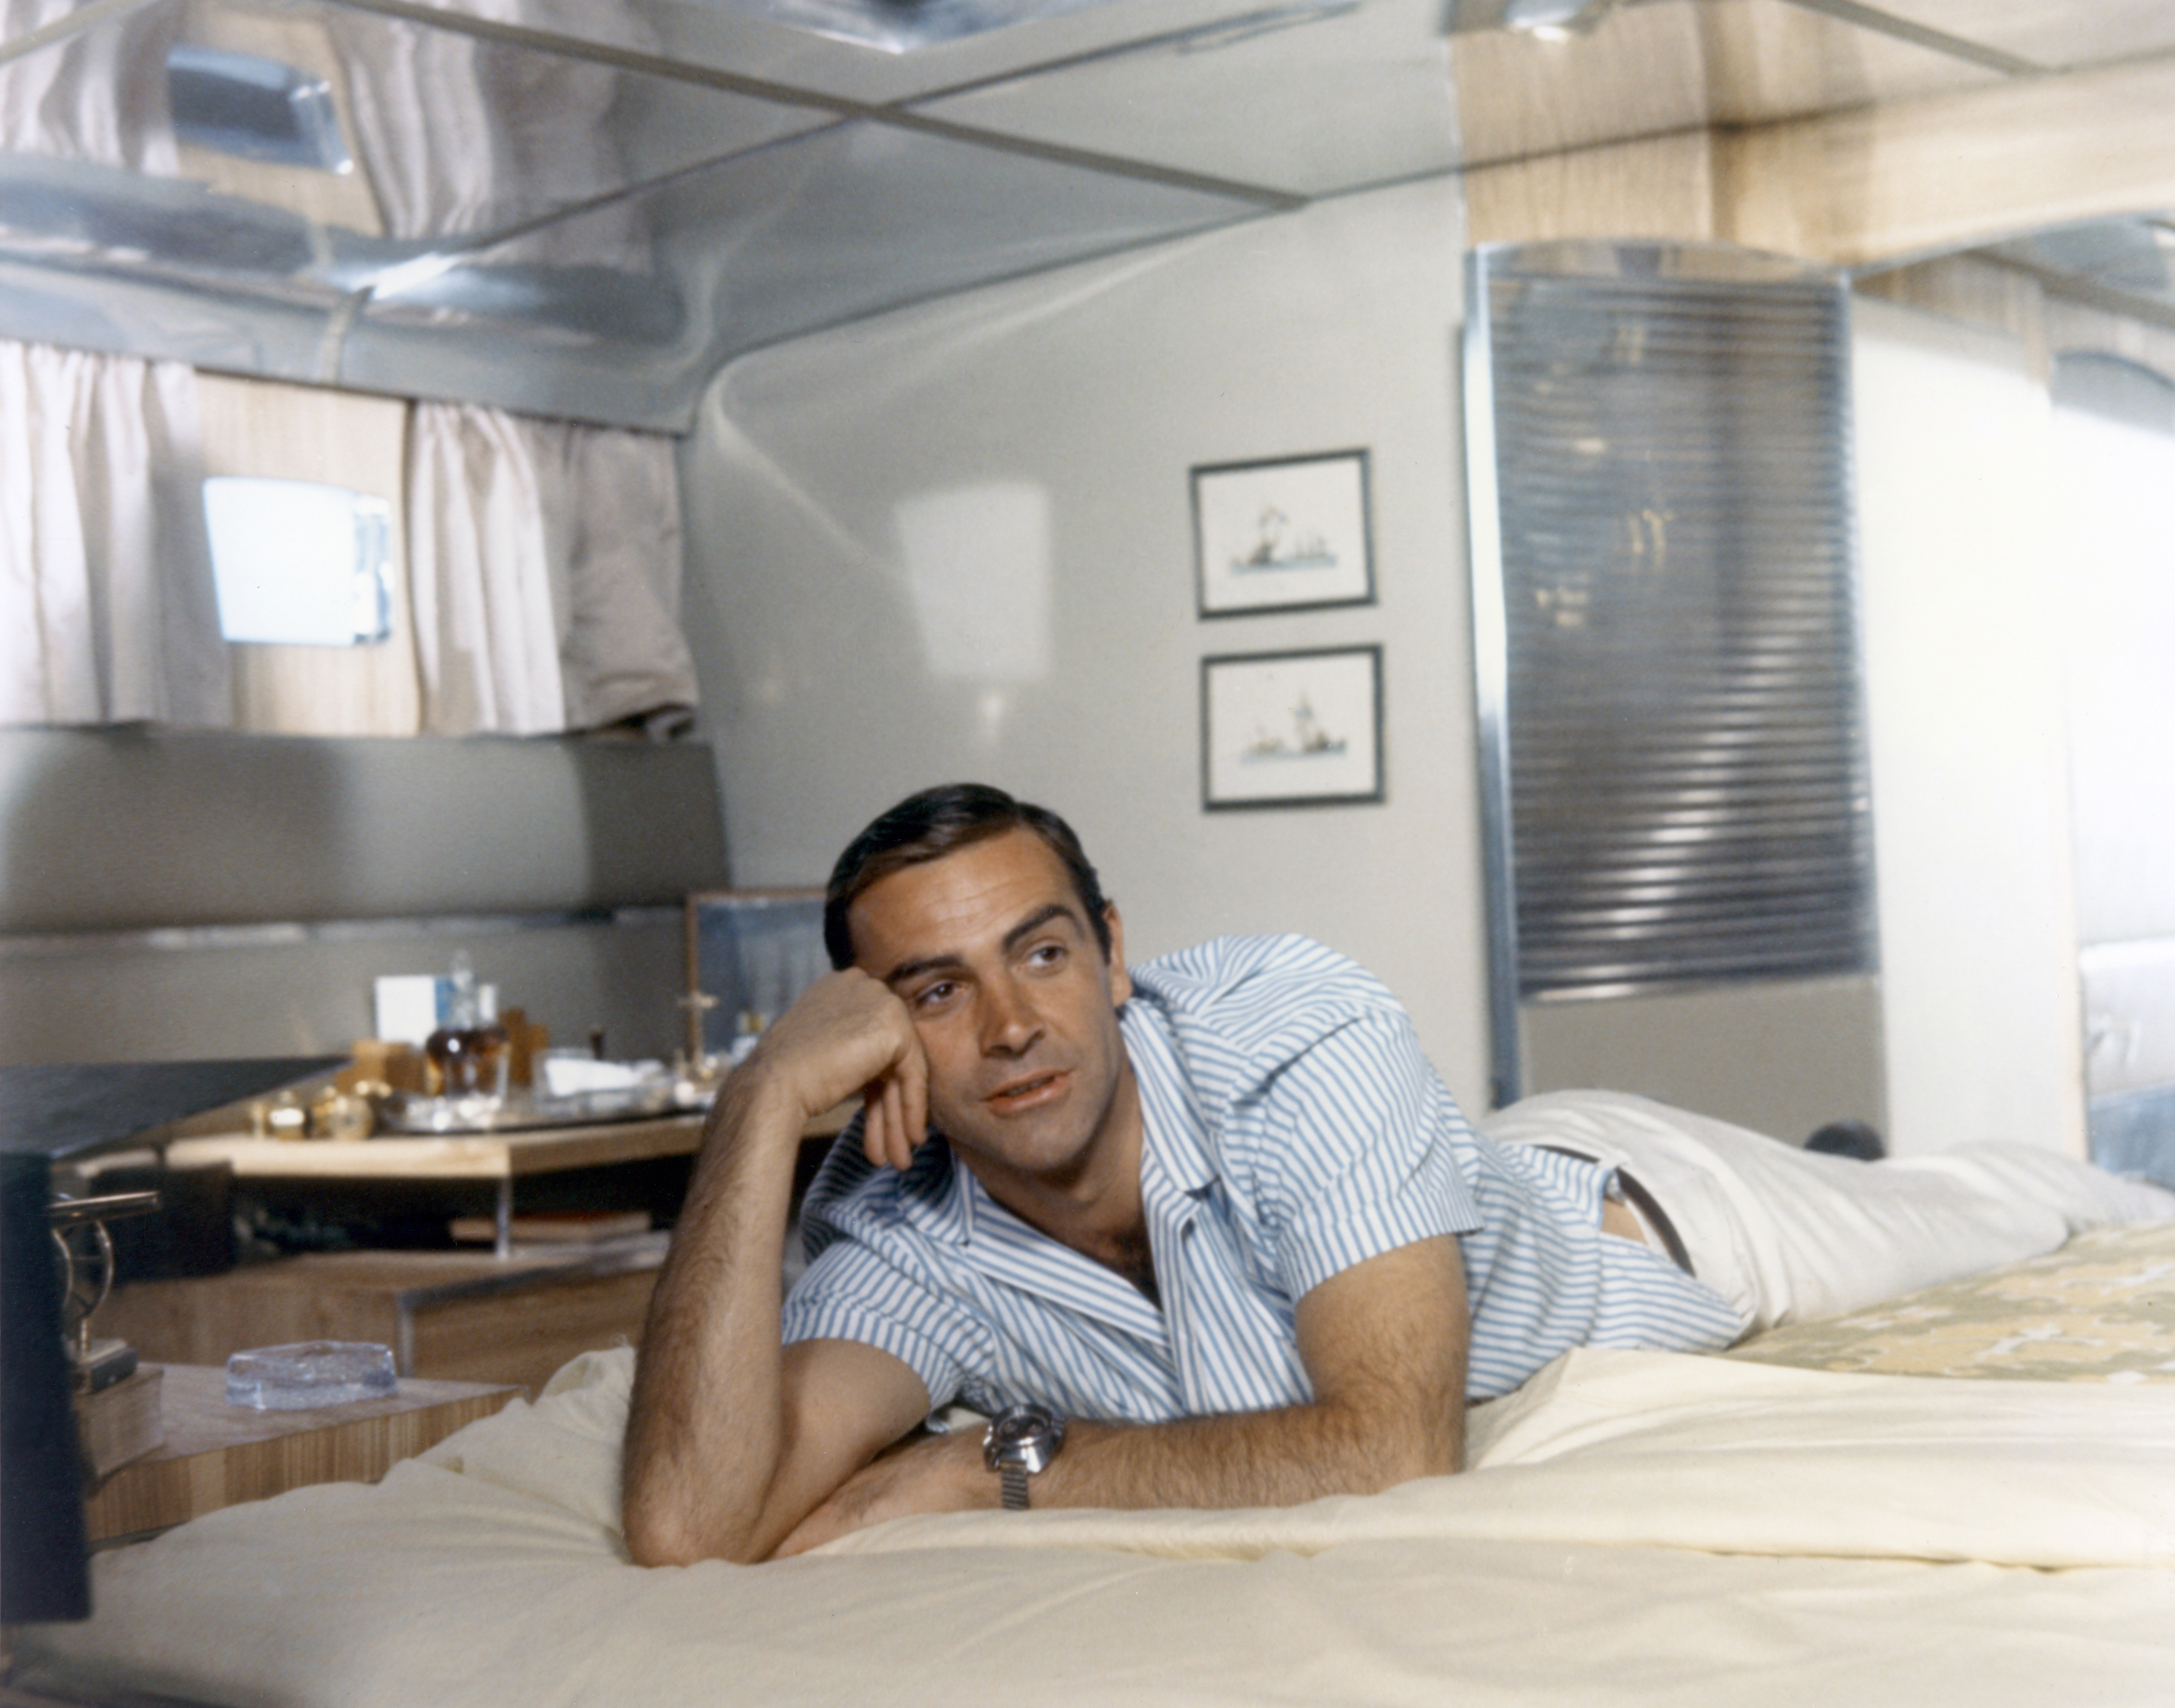 Sean Connery am Set von "Thunderball" um 1965. | Quelle: Getty Images